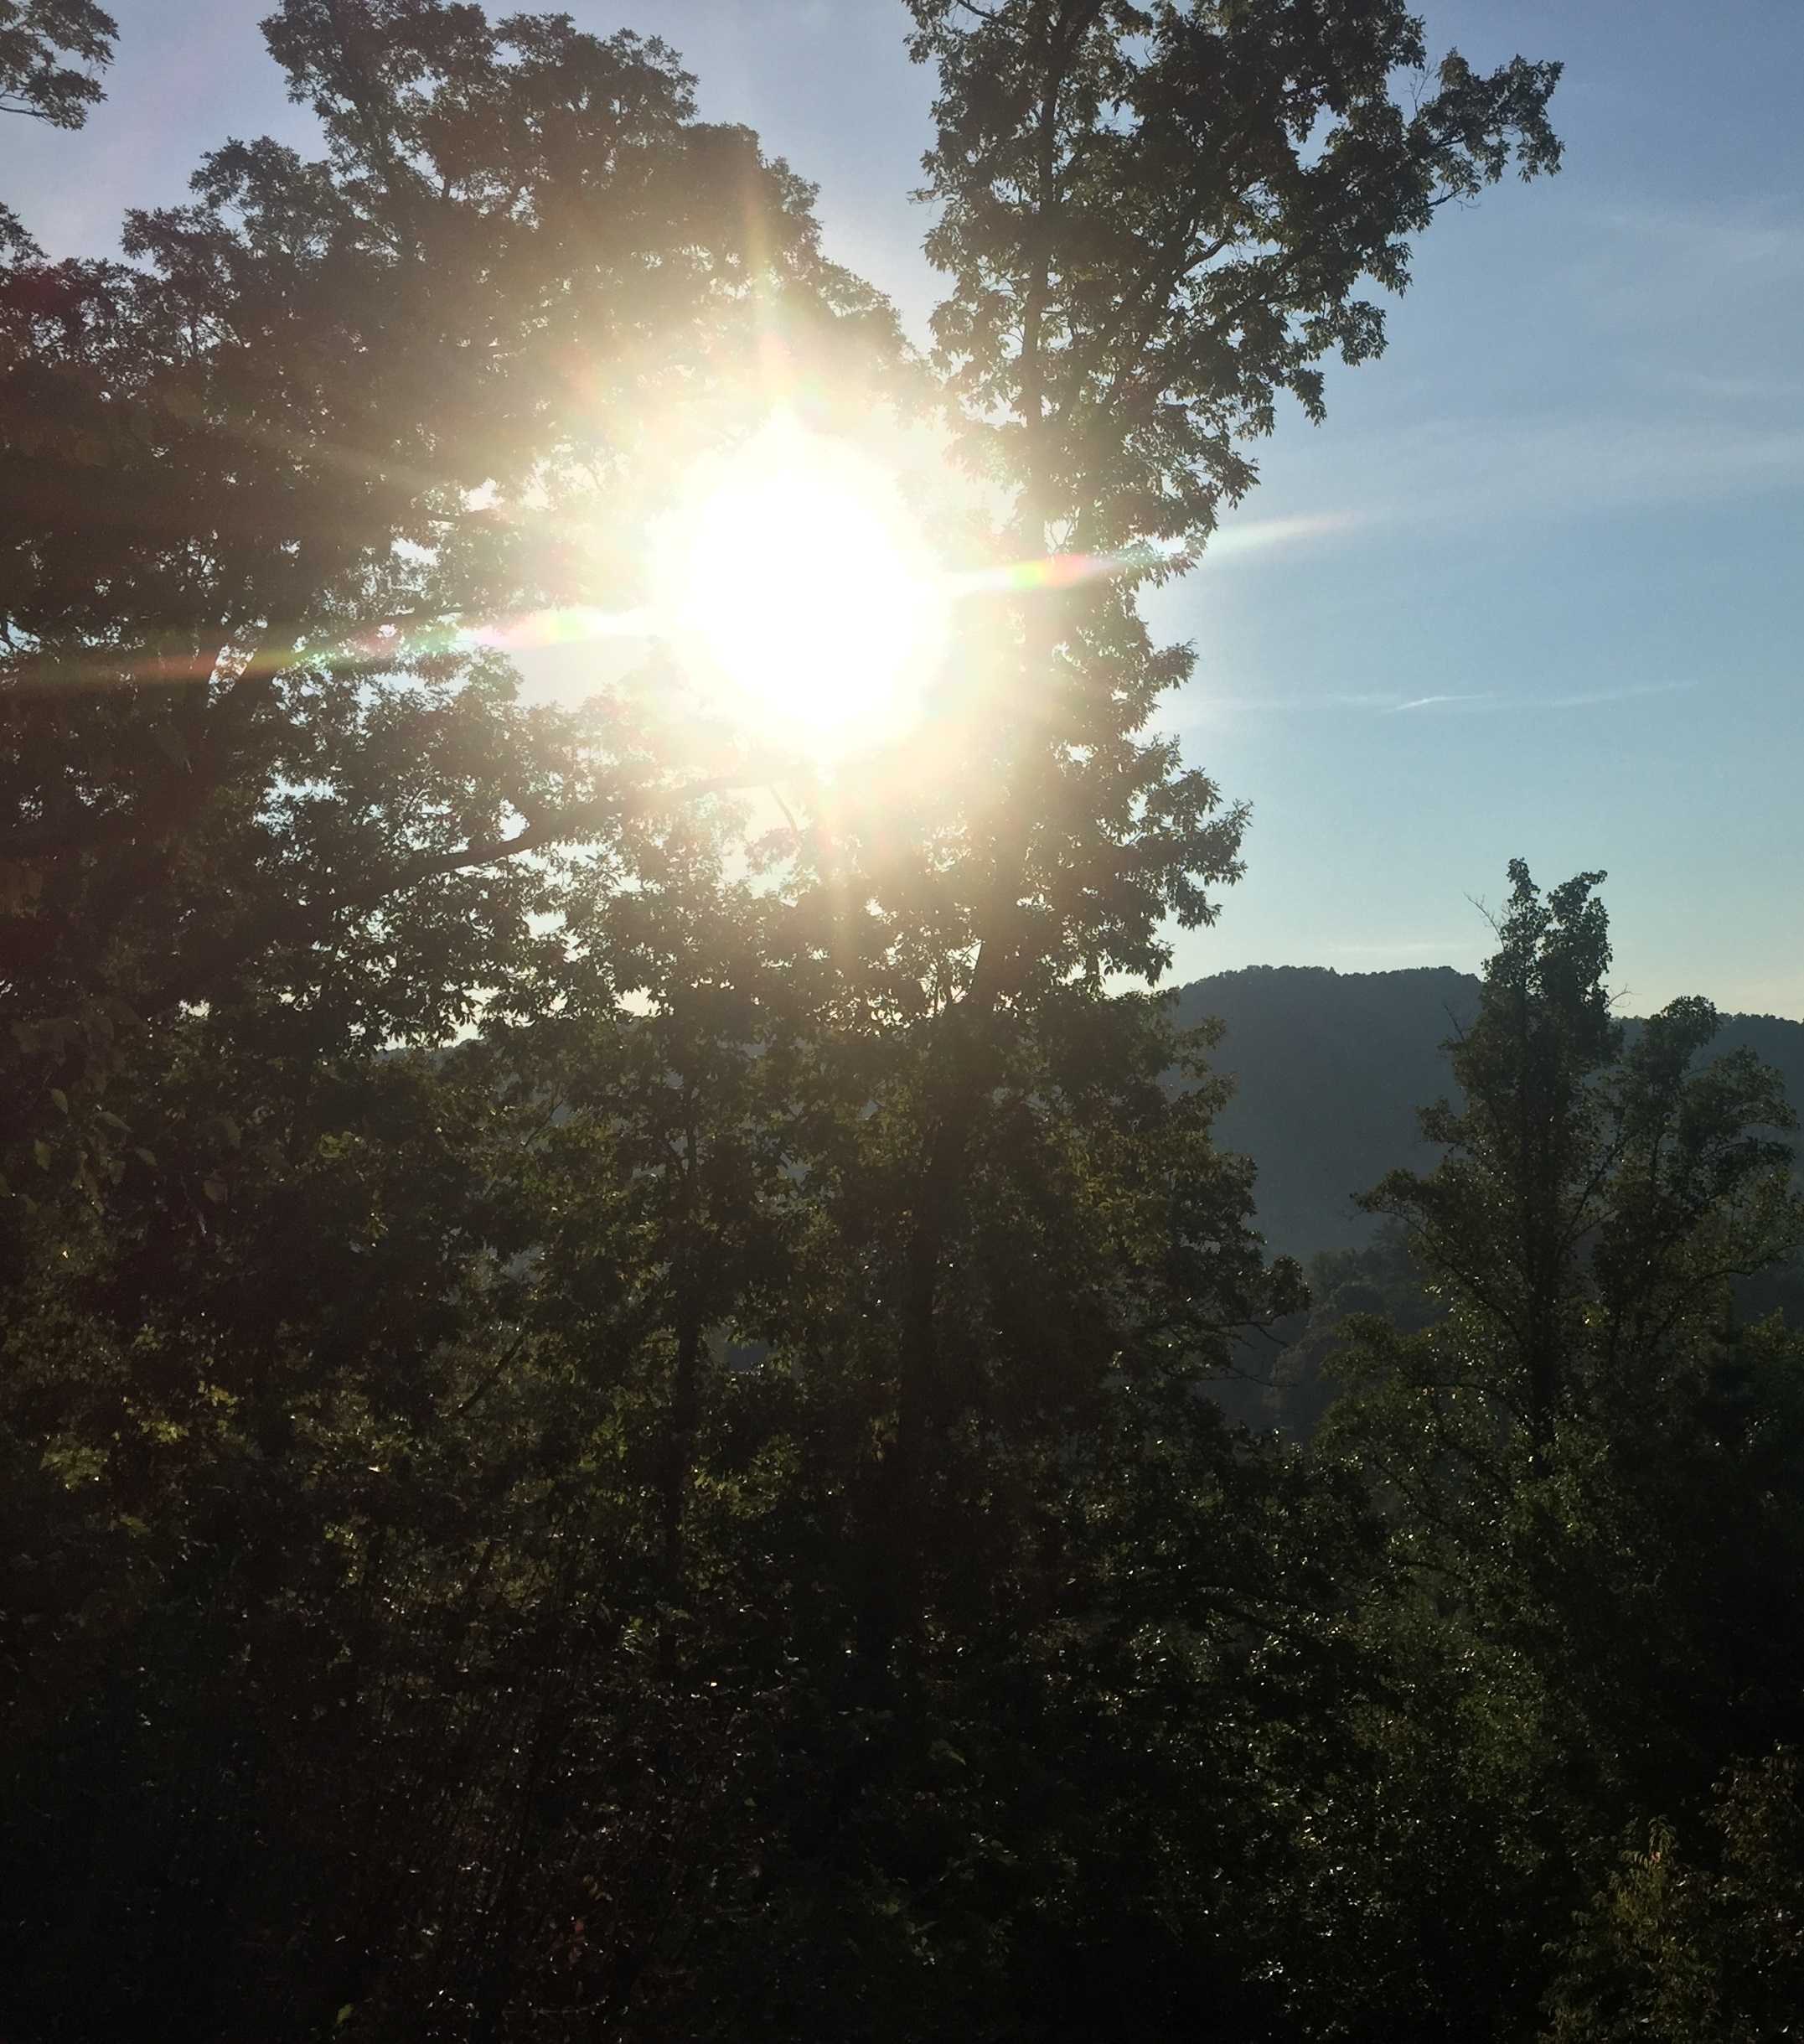 North Carolina sun through the trees 2016-09